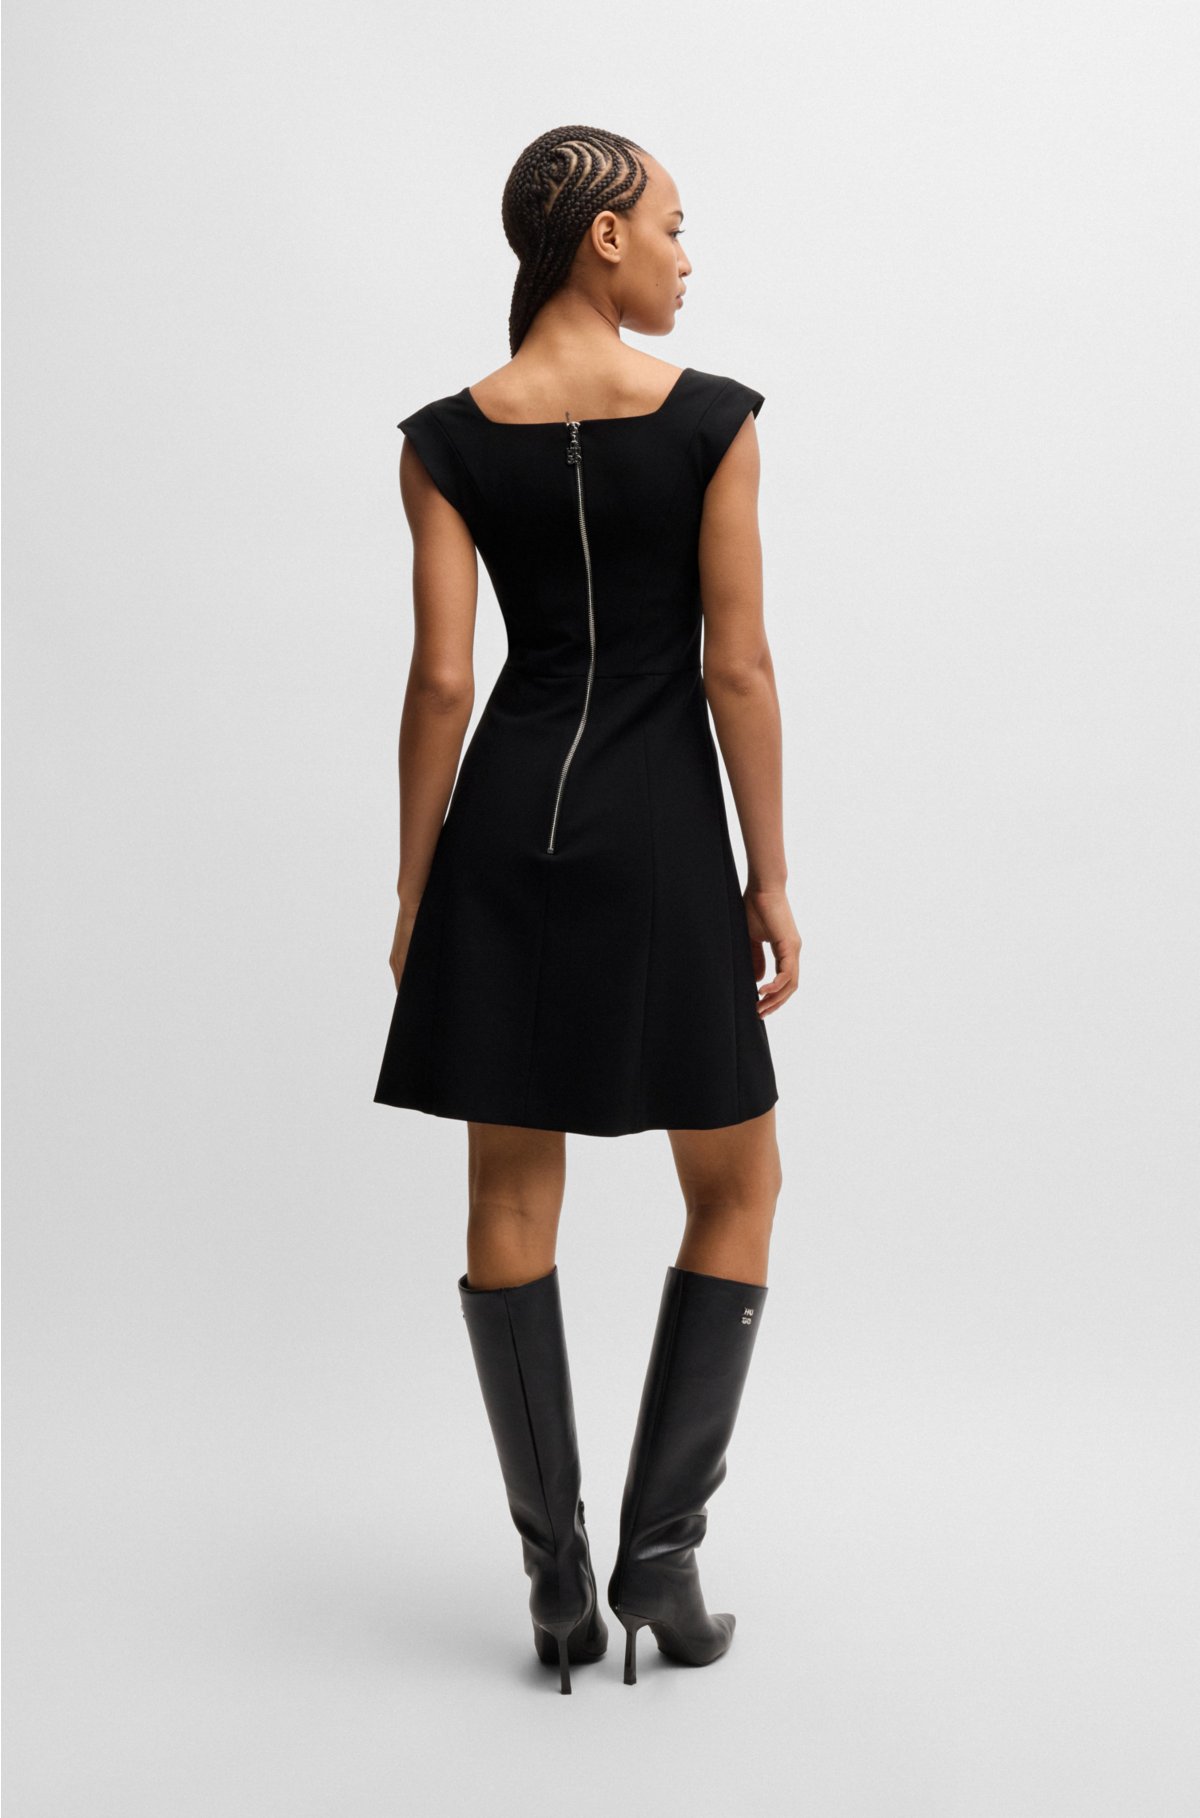 Square-neck dress in stretch fabric, Black